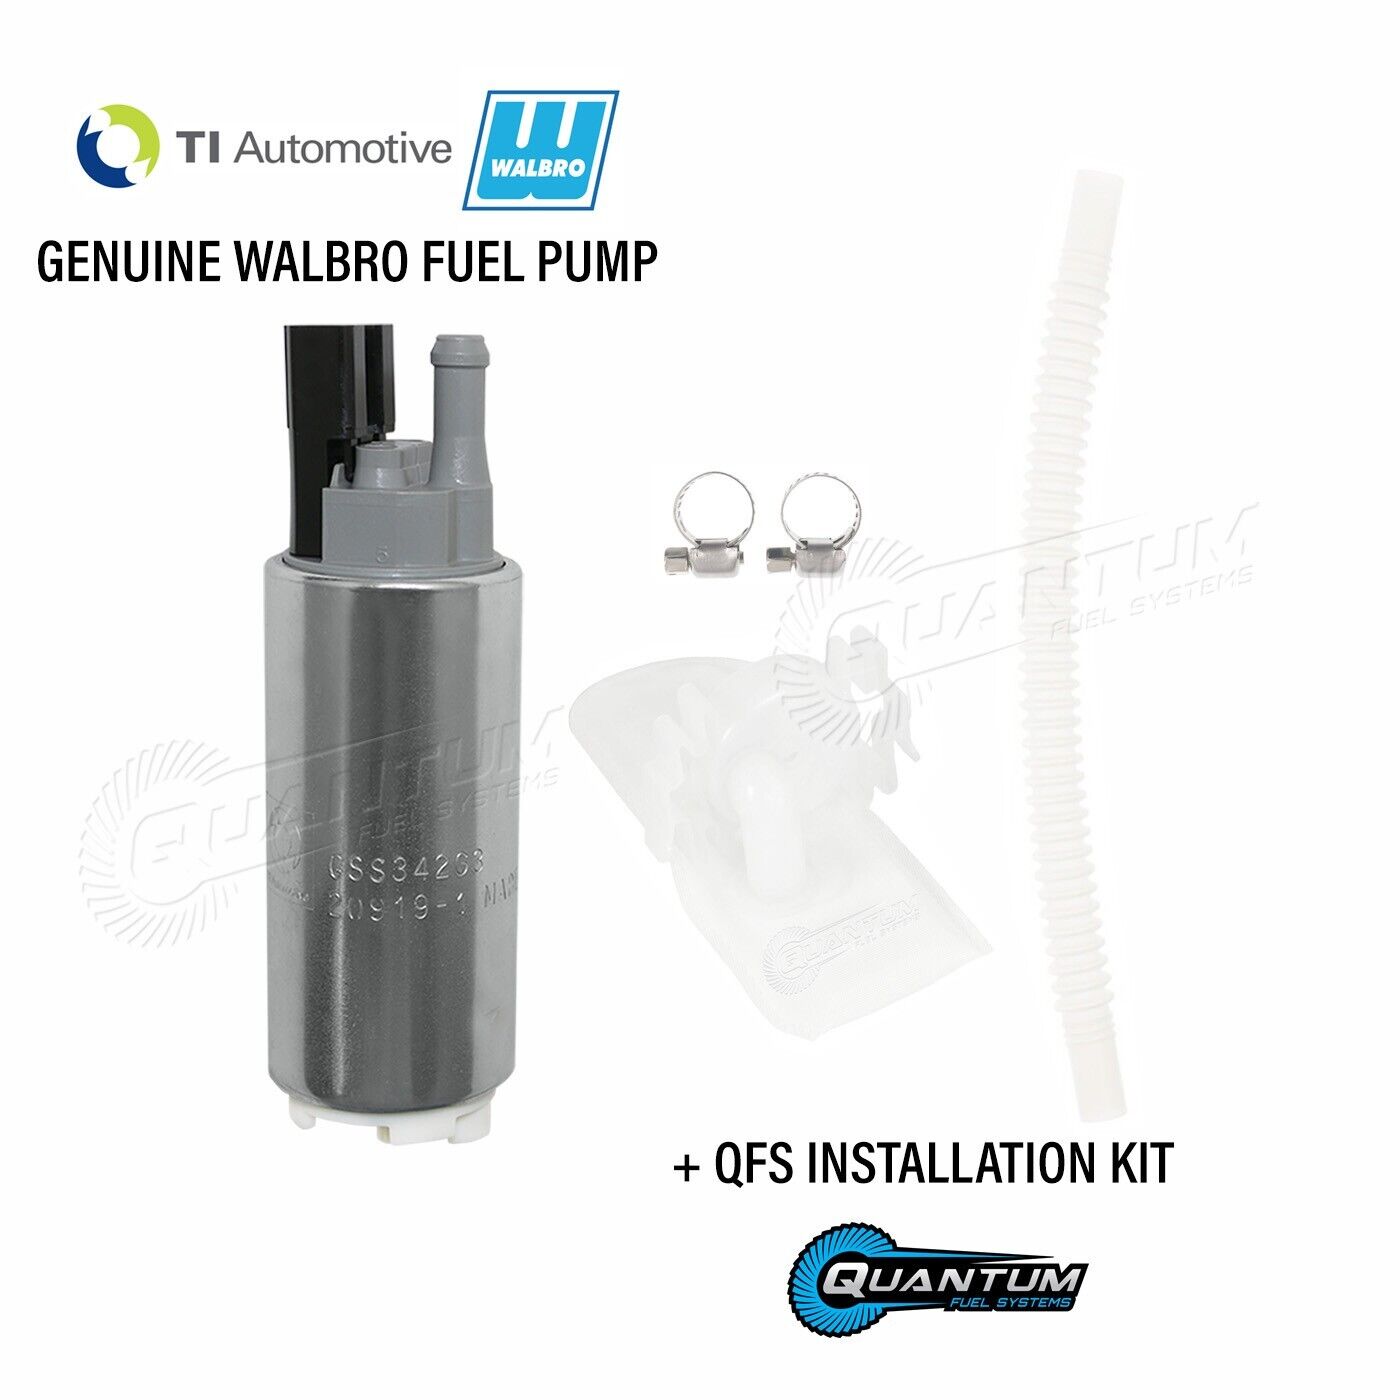 GENUINE WALBRO/TI 255 GSS342 Fuel Pump +Kit for 92-06 Honda Civic Acura Integra